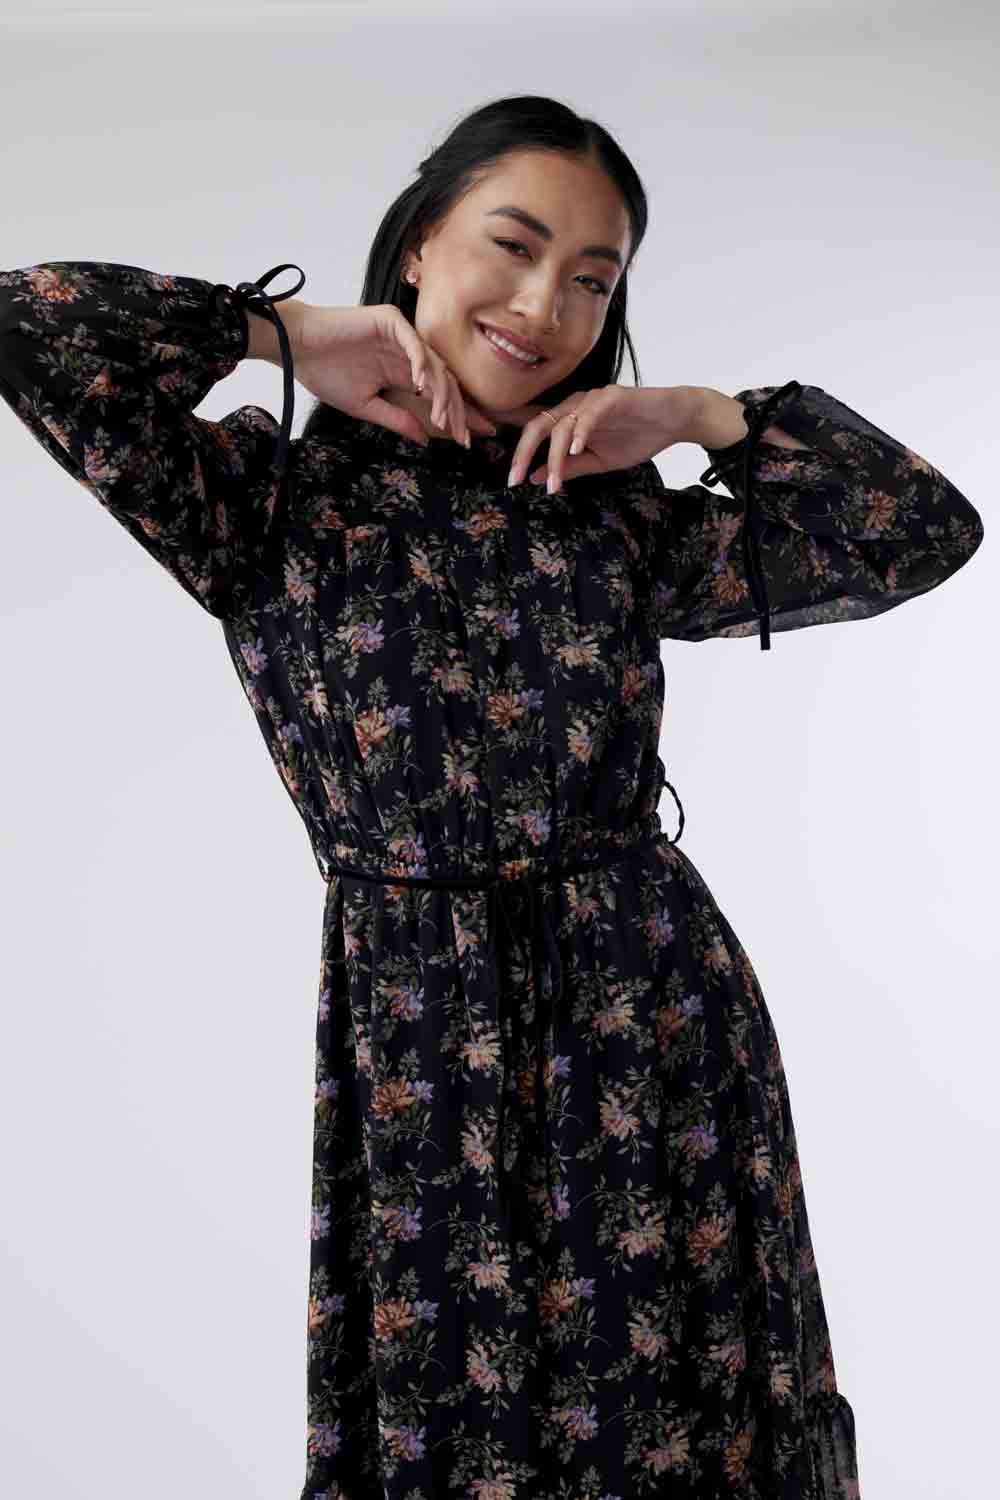 Ava Black Floral Midi Dress